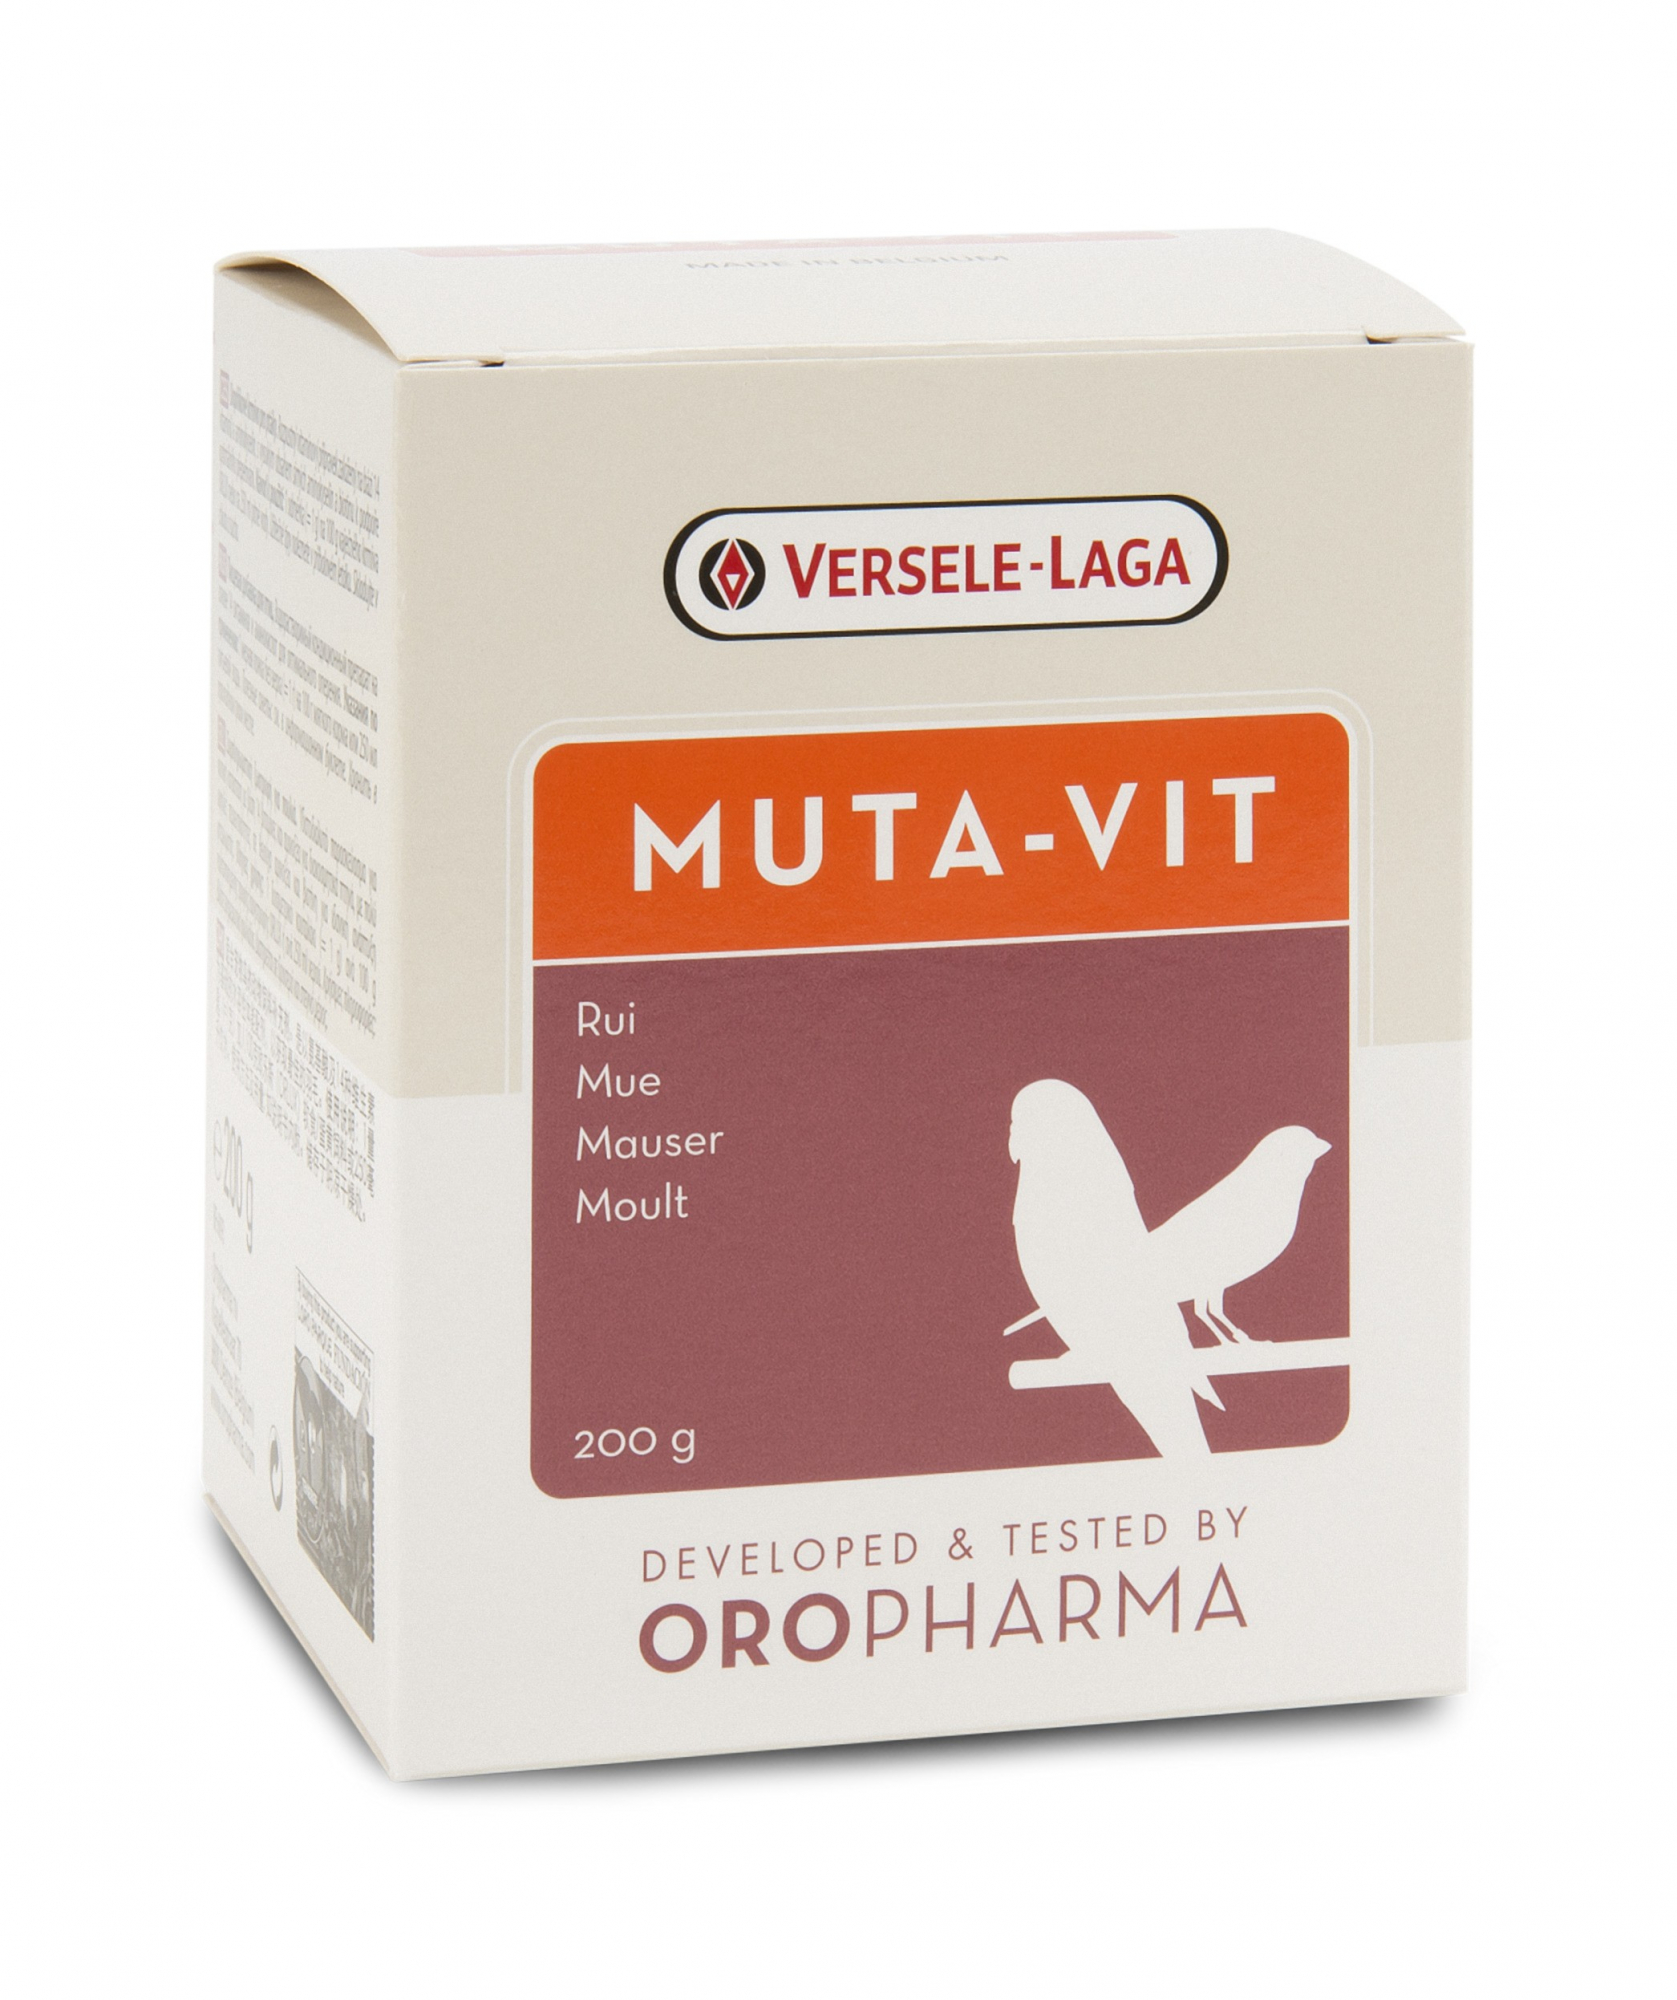 Oropharma Muta-Vit mistura de vitaminas para muda de penas